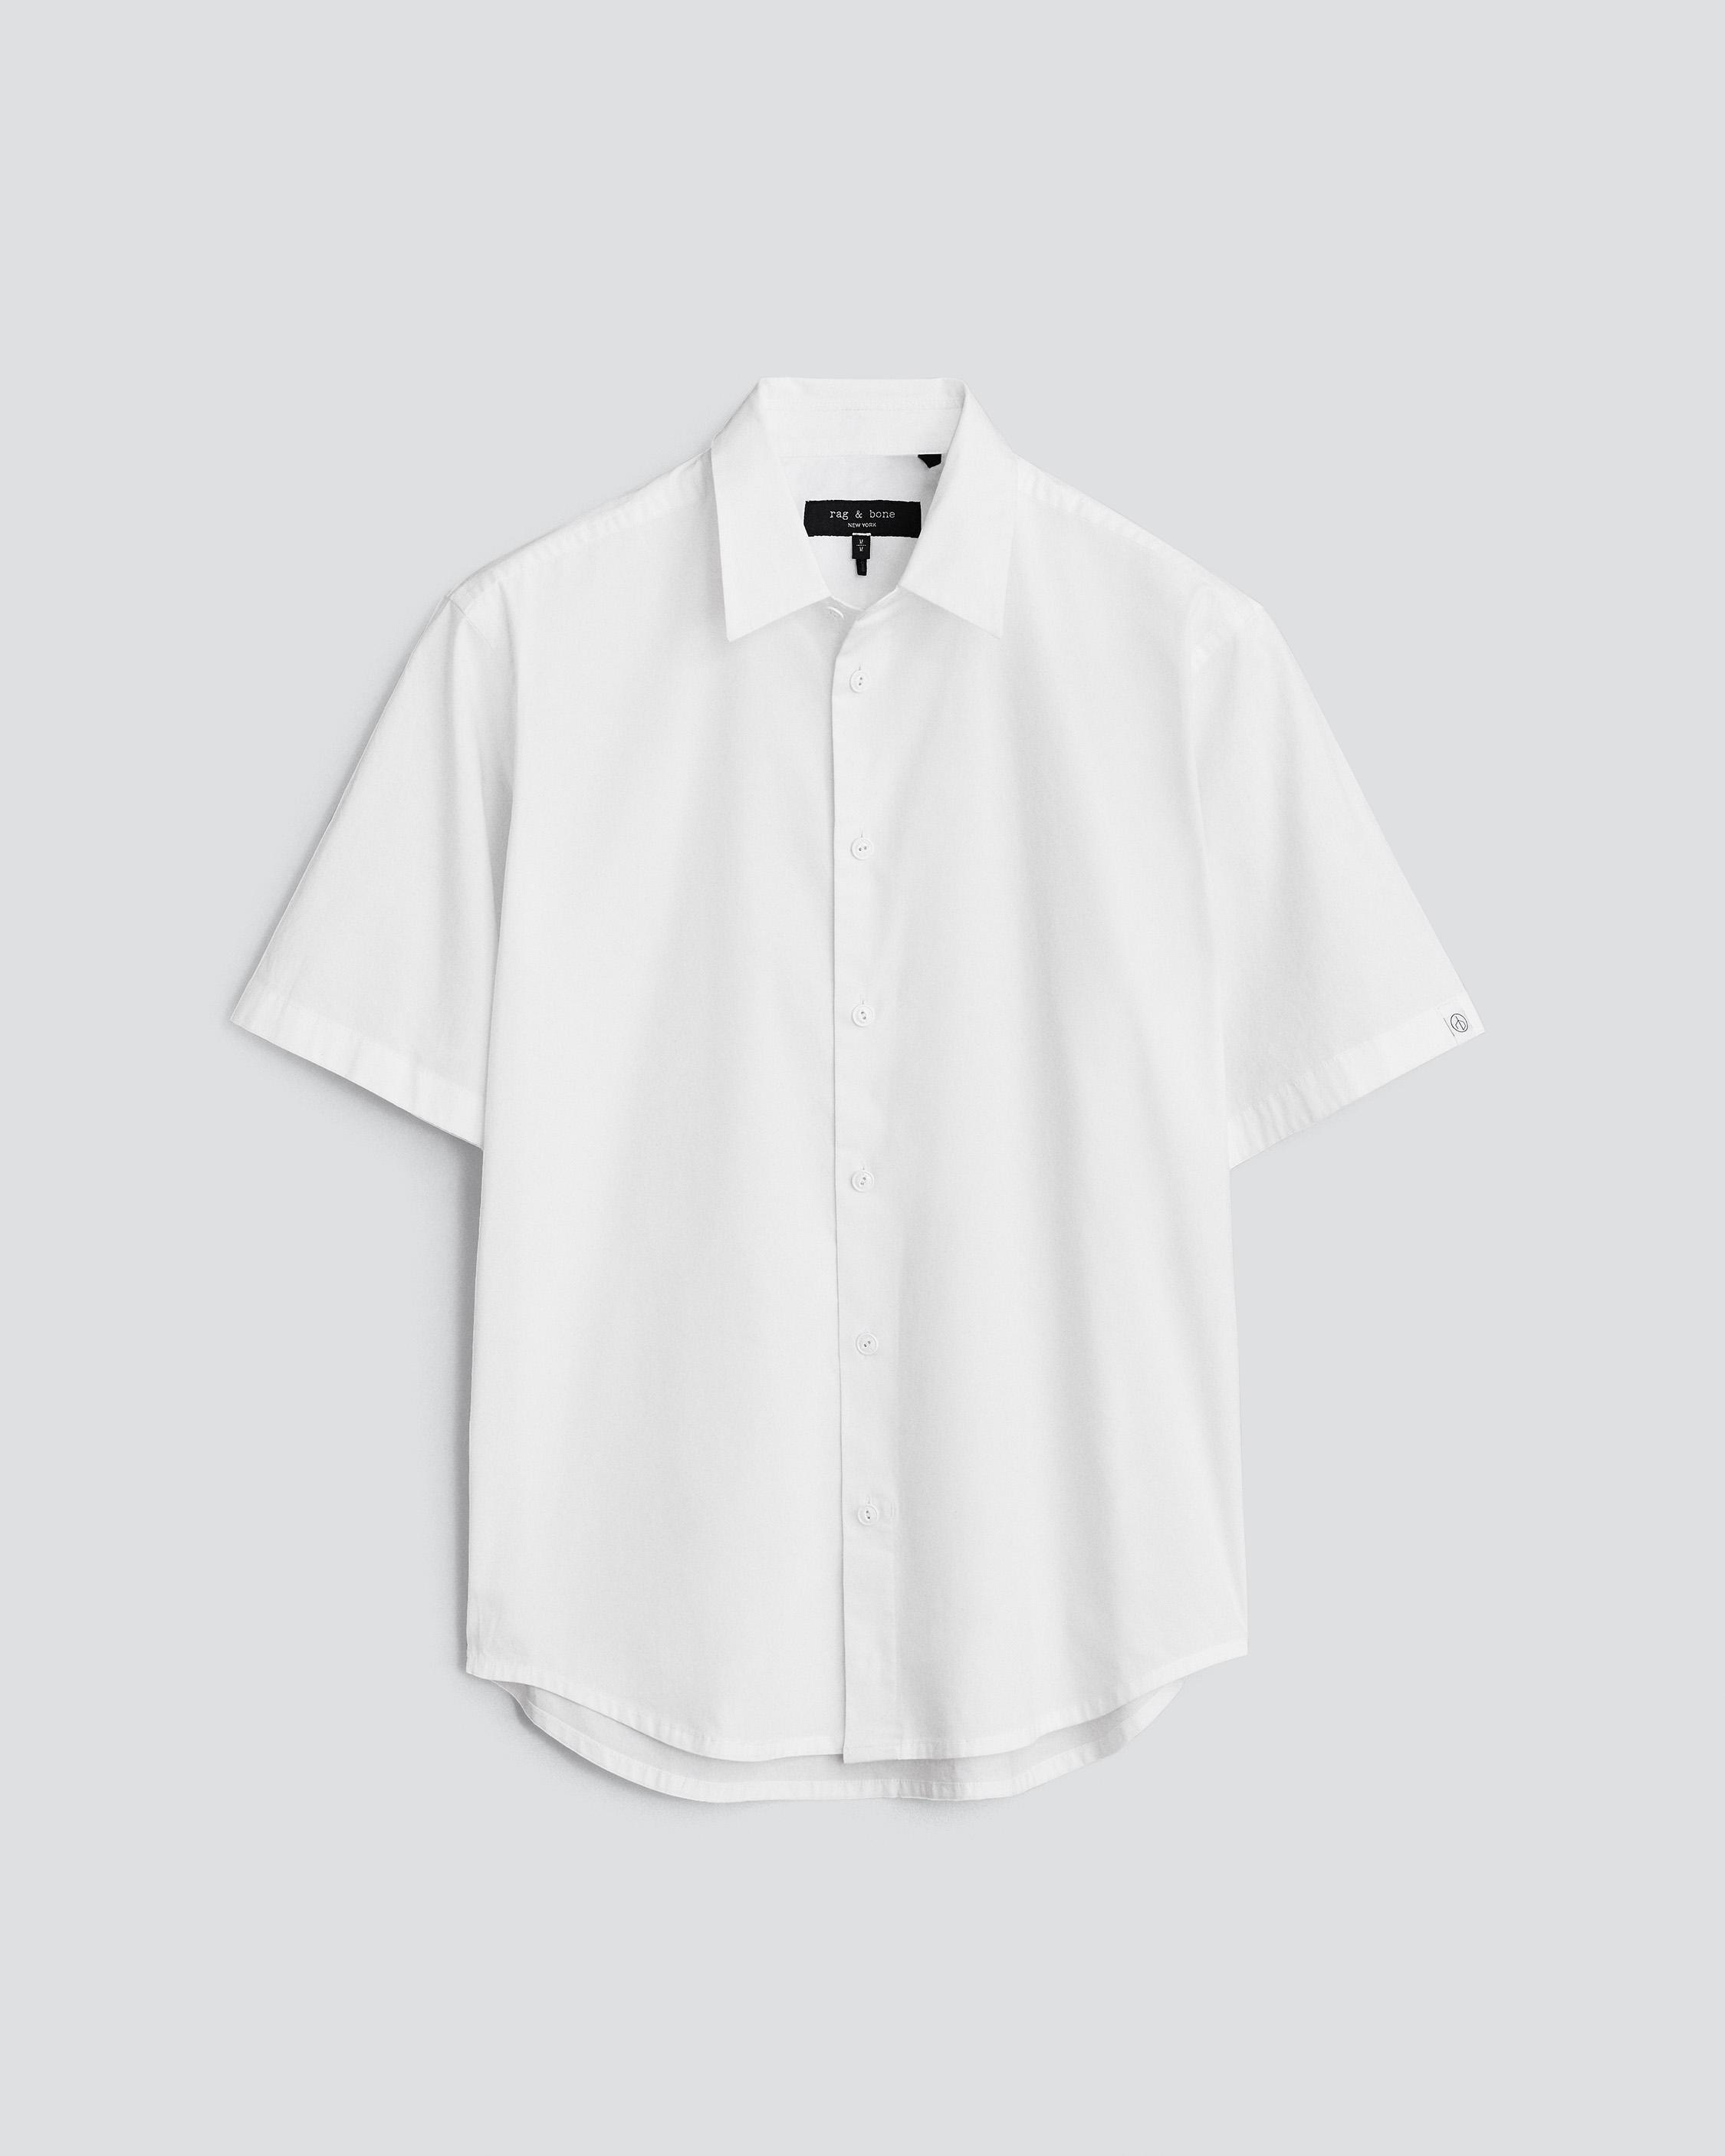 Moore Cotton Poplin Shirt
Relaxed Fit Shirt - 1